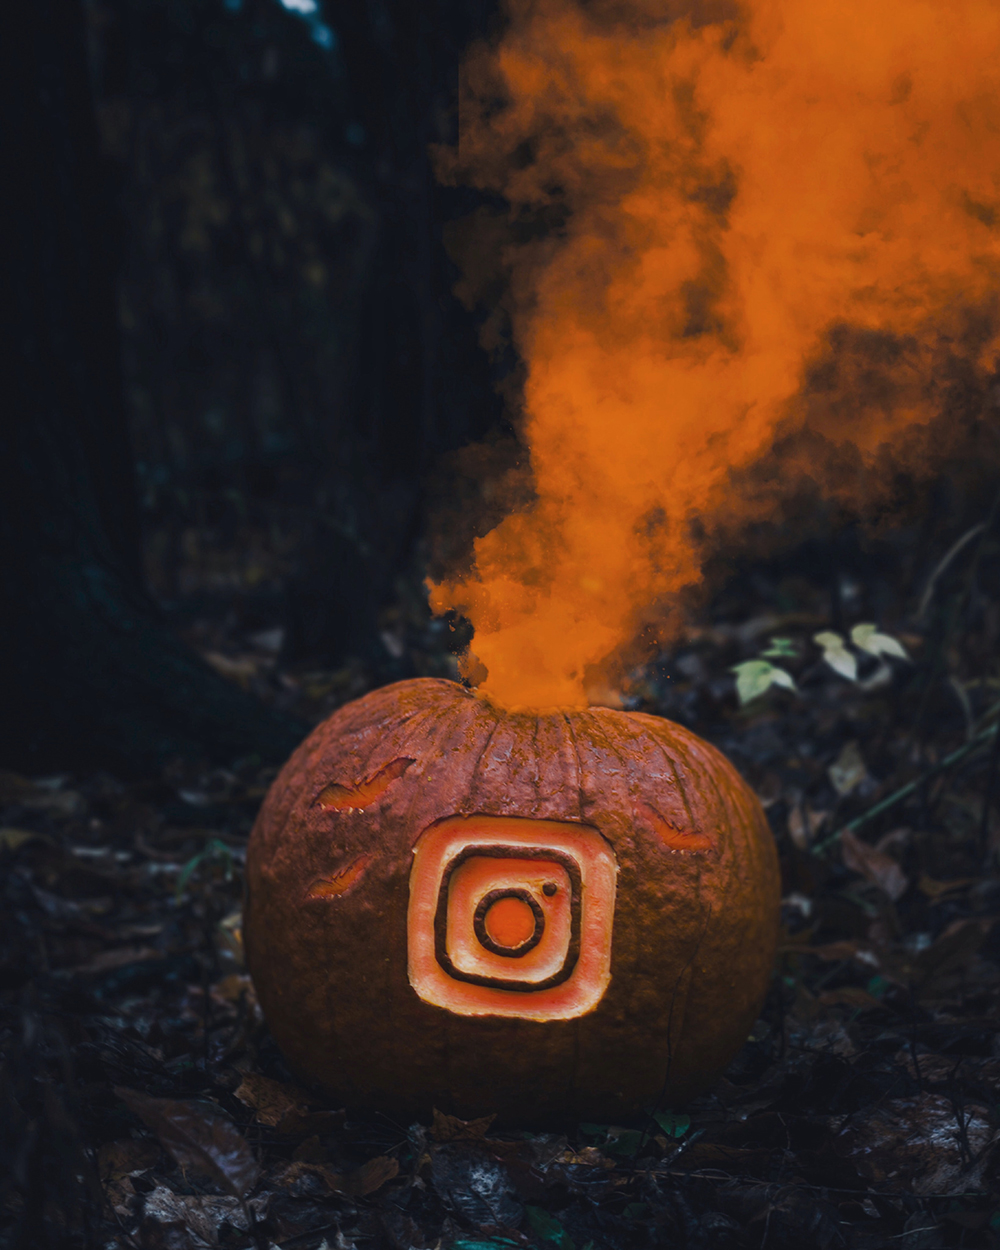 Pumpkin with Instagram logo carved on front